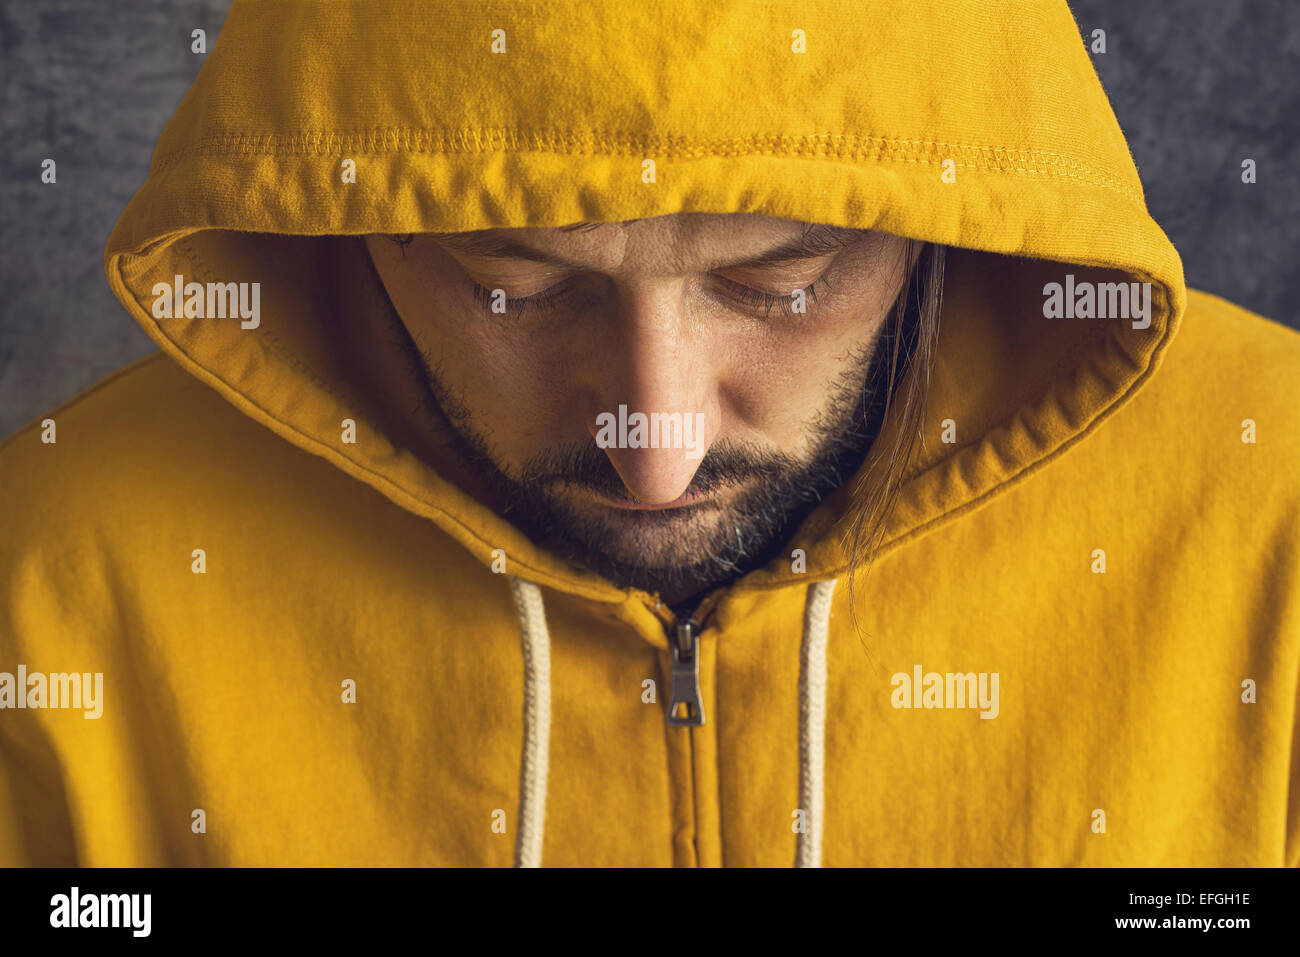 Adult Bearded Man Wearing Yellow Hooded Jacket, Eyes Closed. Stock Photo